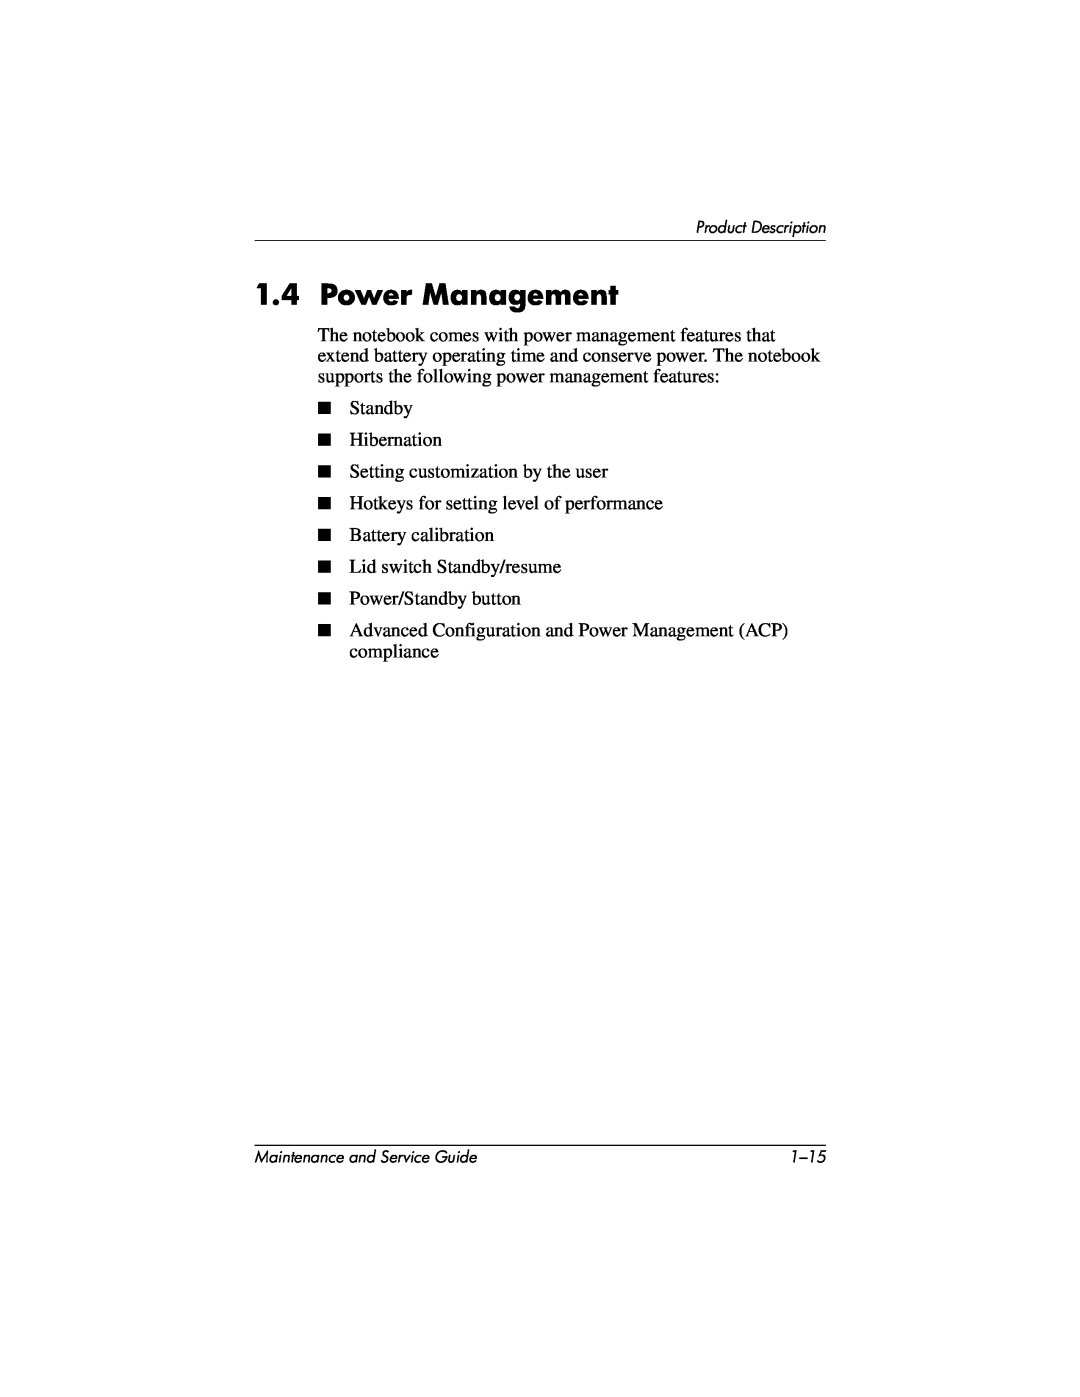 HP nx7000, X1000 manual Power Management 